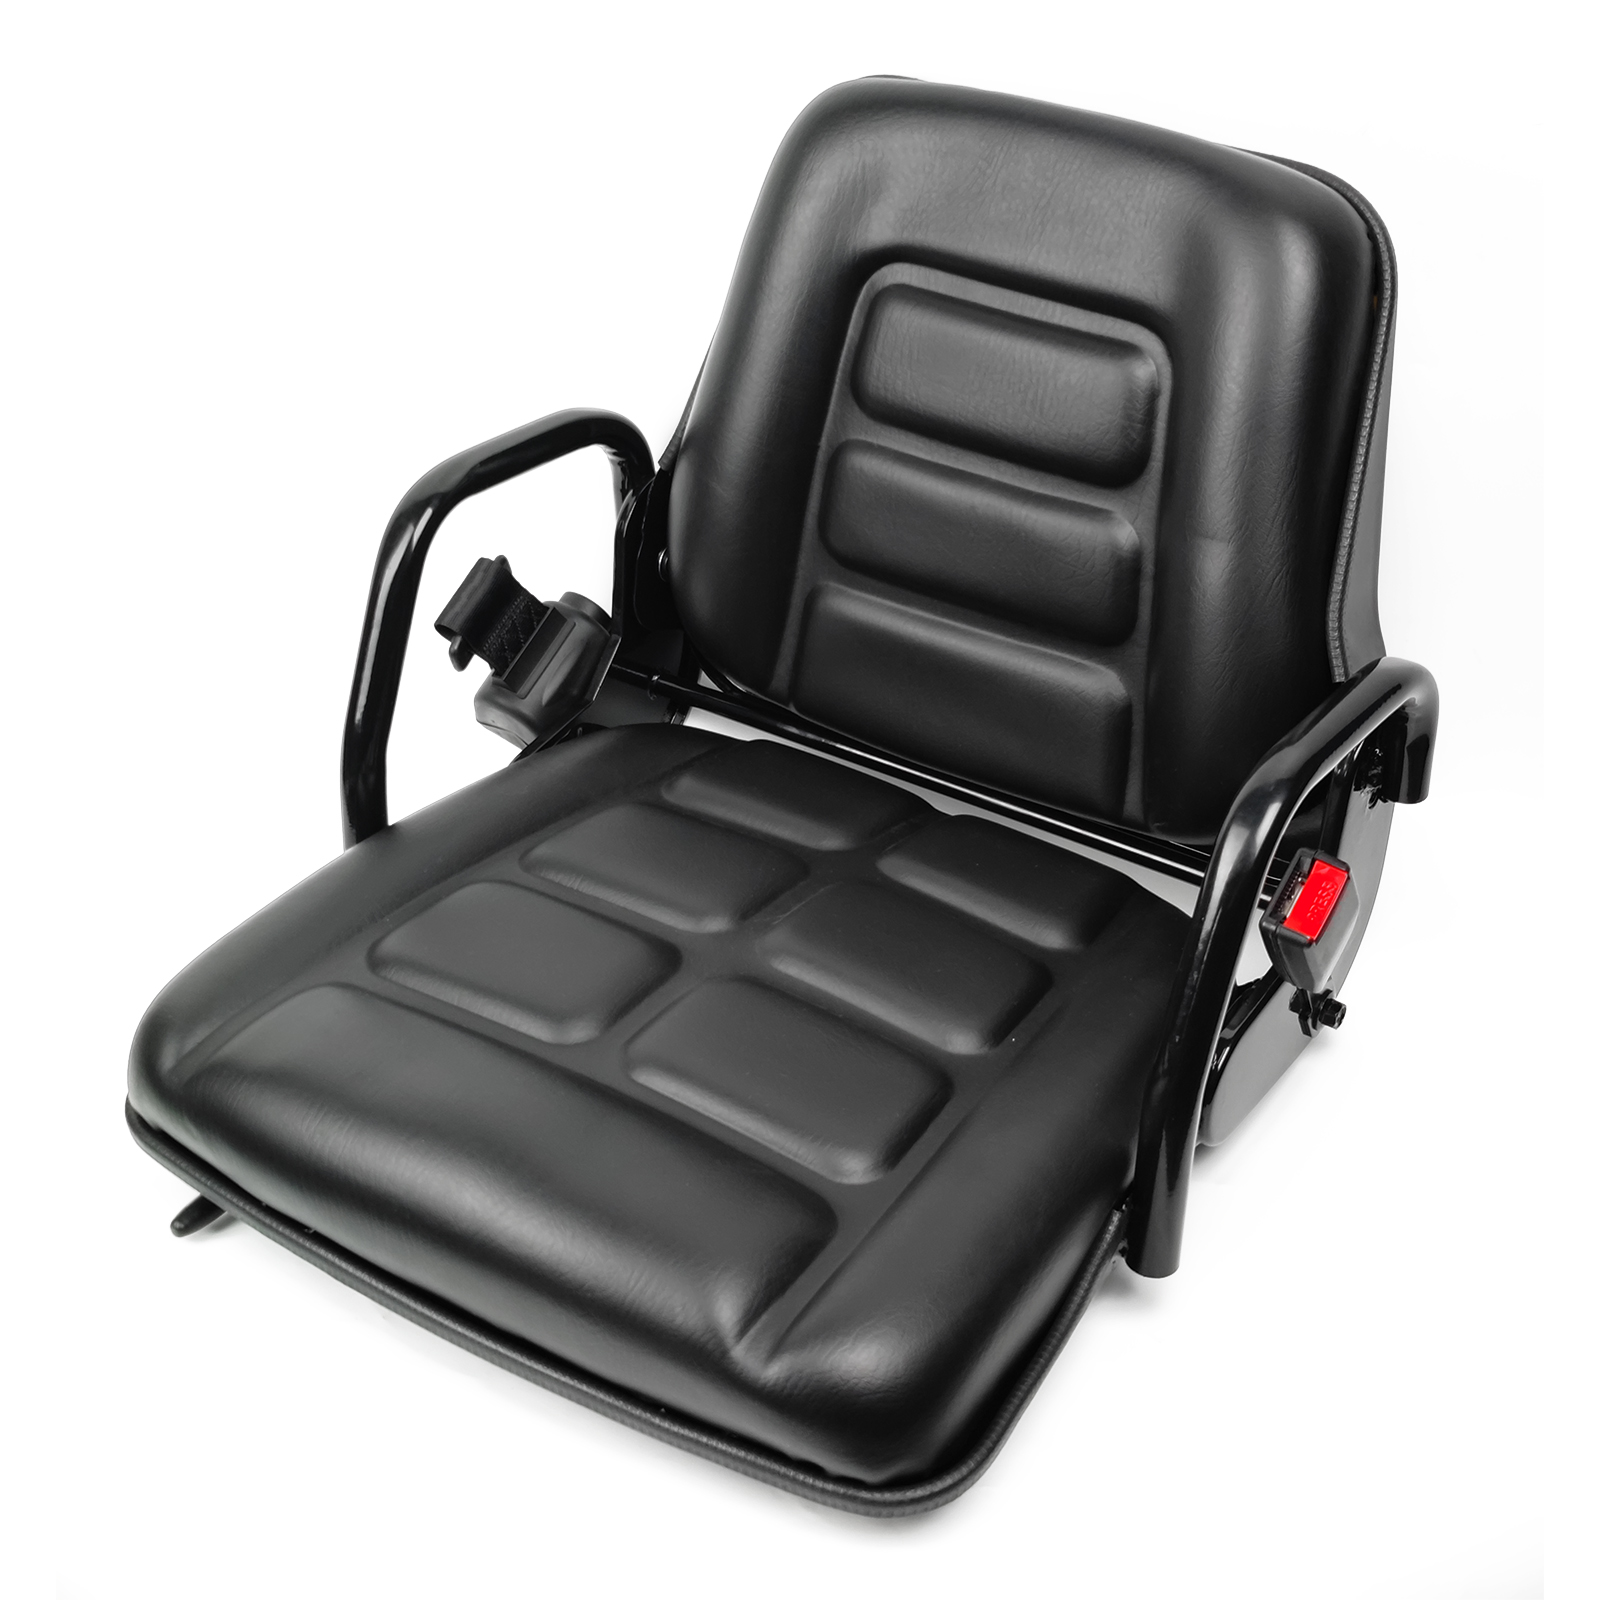 Forklift Seat with Integrated Steel Armrest Fold Down Backrest Fits Caterpillar Mitsubishi Doosan forklifts Featured Image